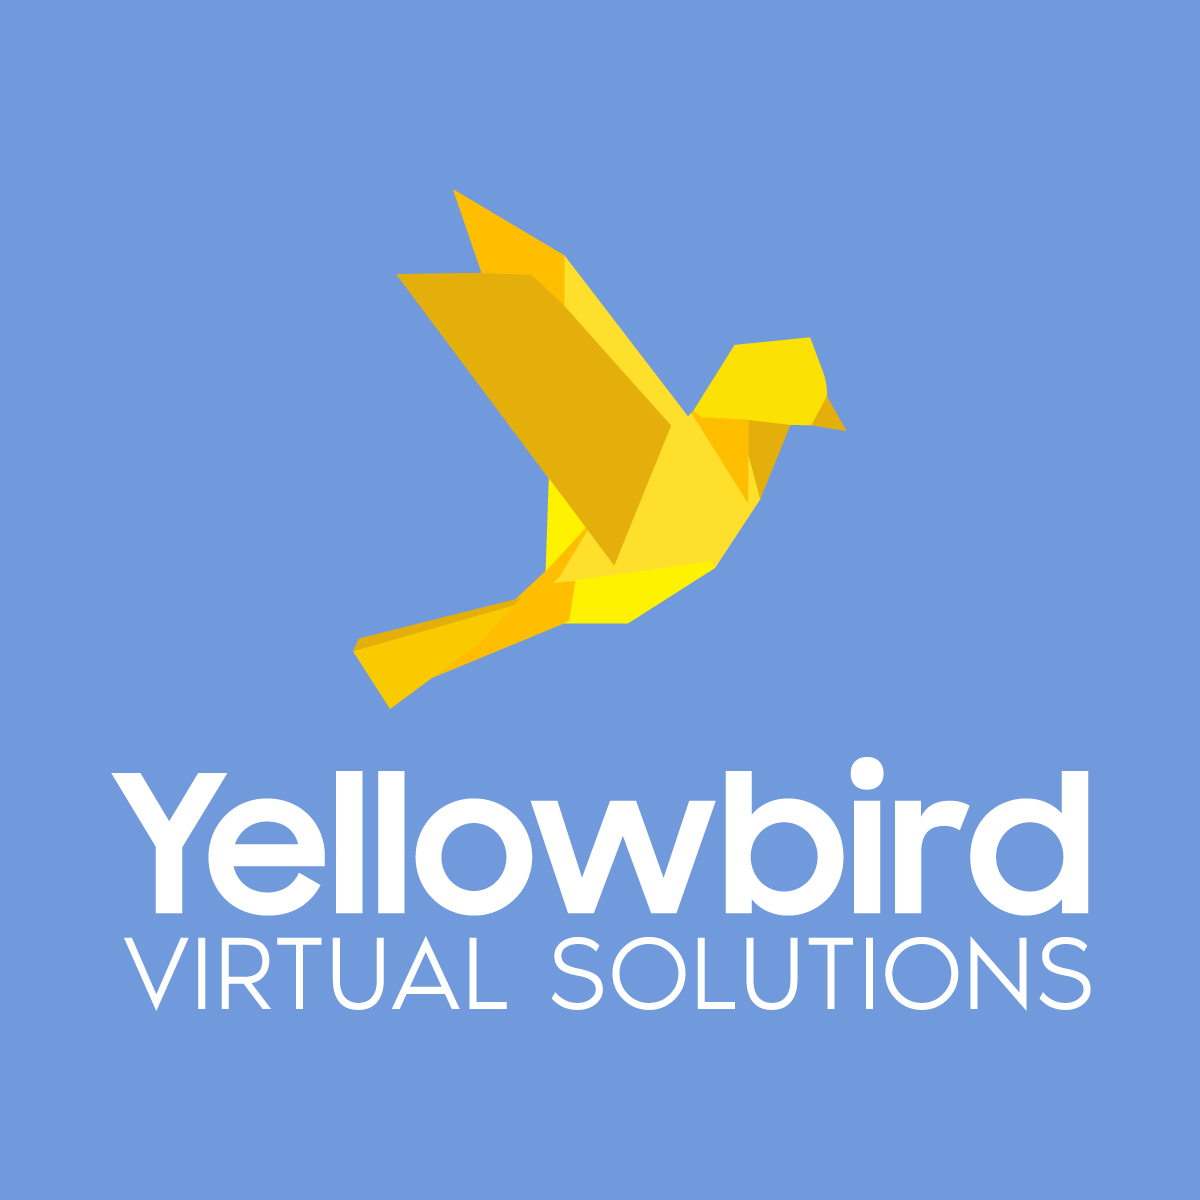 Yellowbird Virtual Solutions